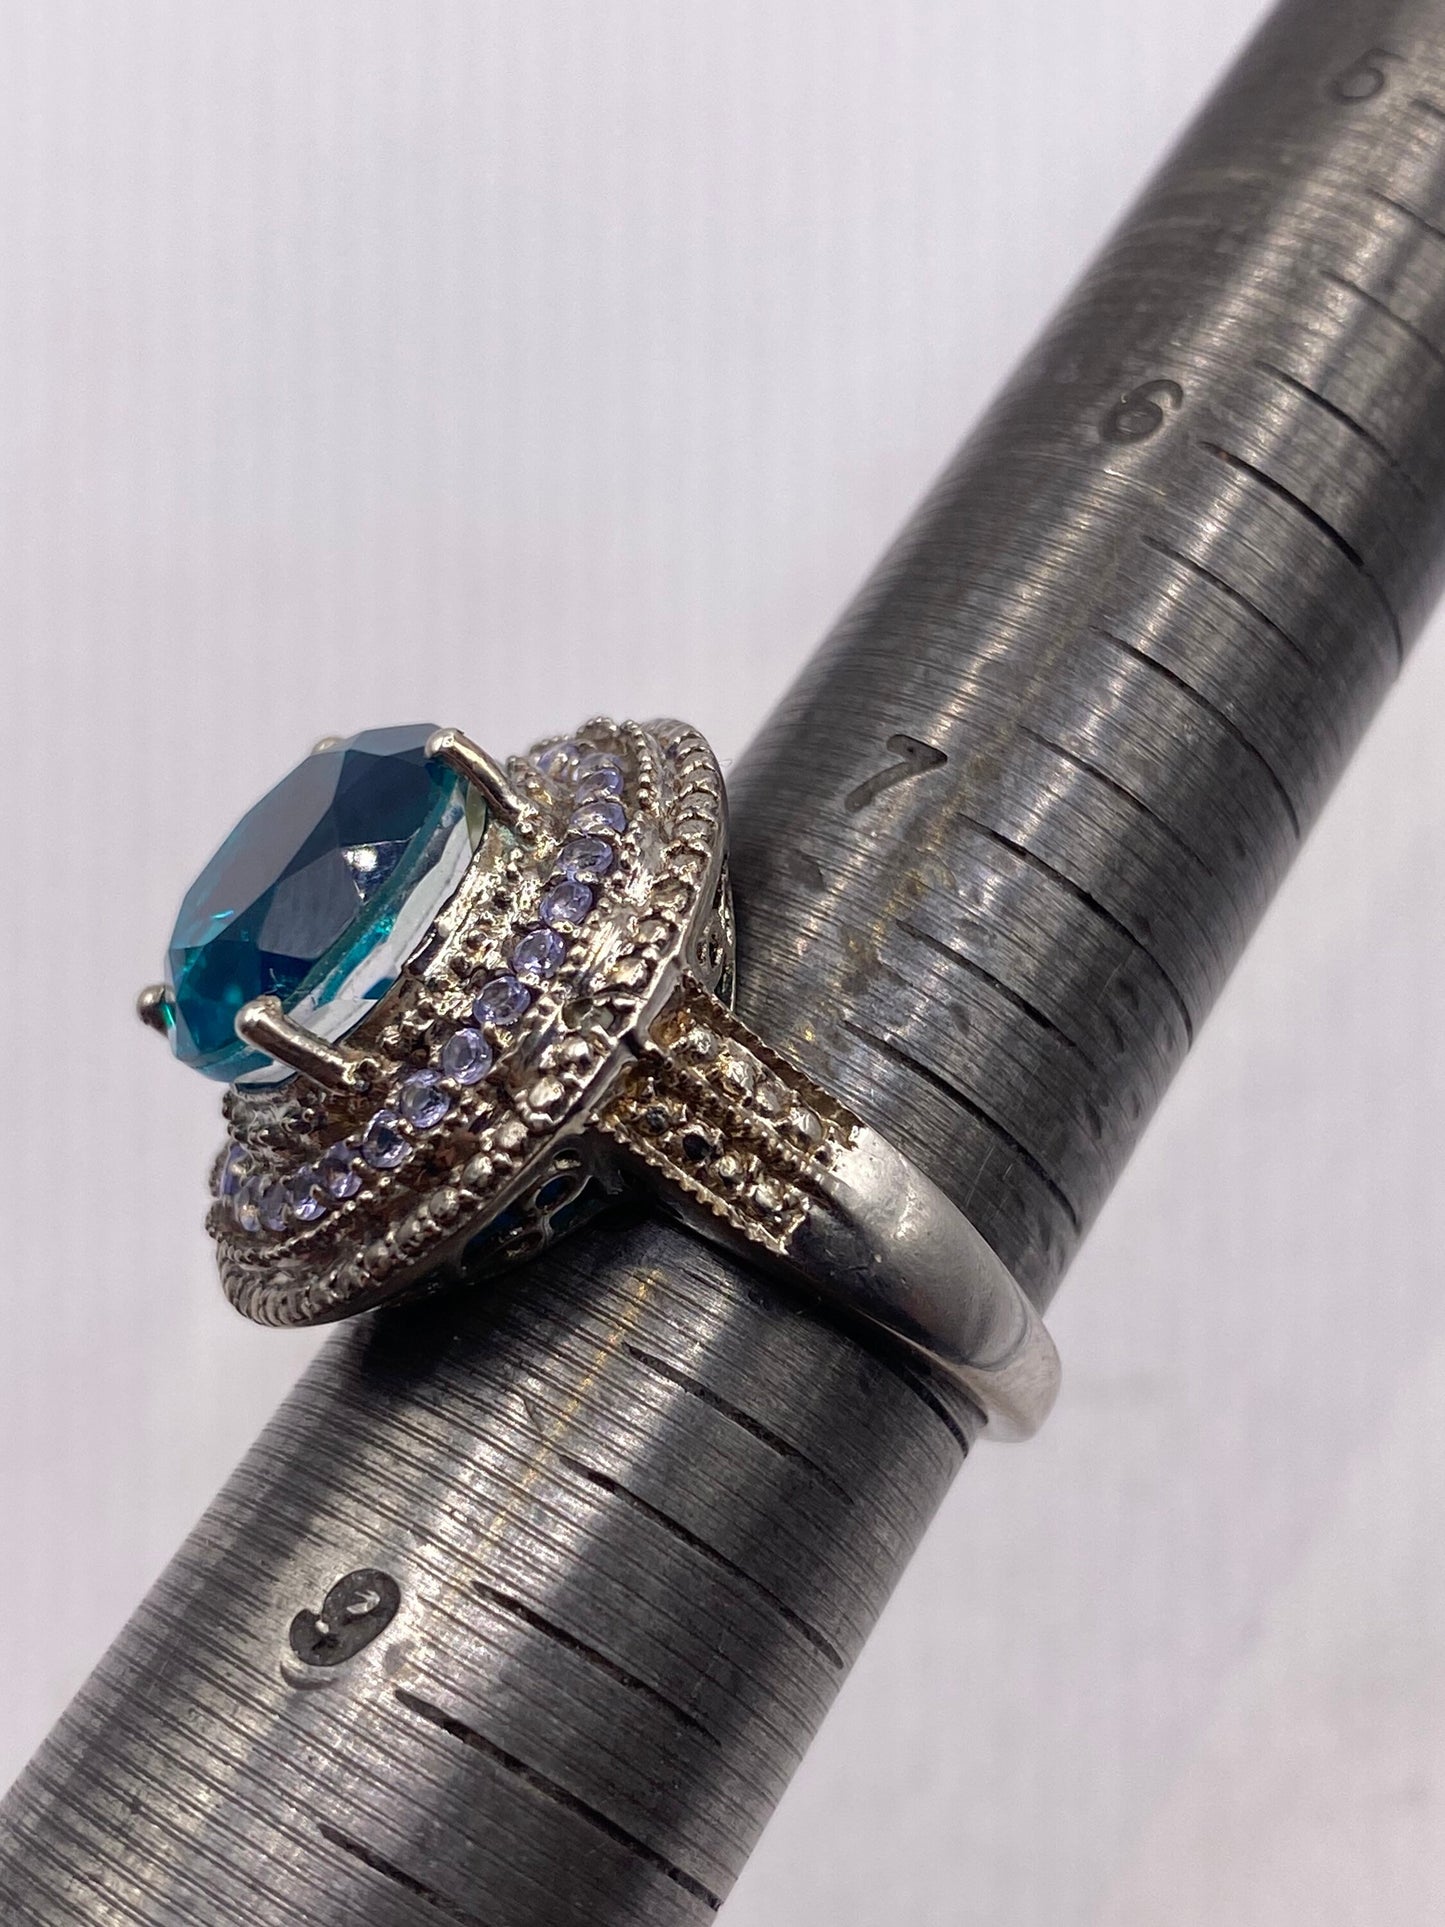 Vintage Blue Tanzanite Fluorite 925 Sterling Silver Deco Ring